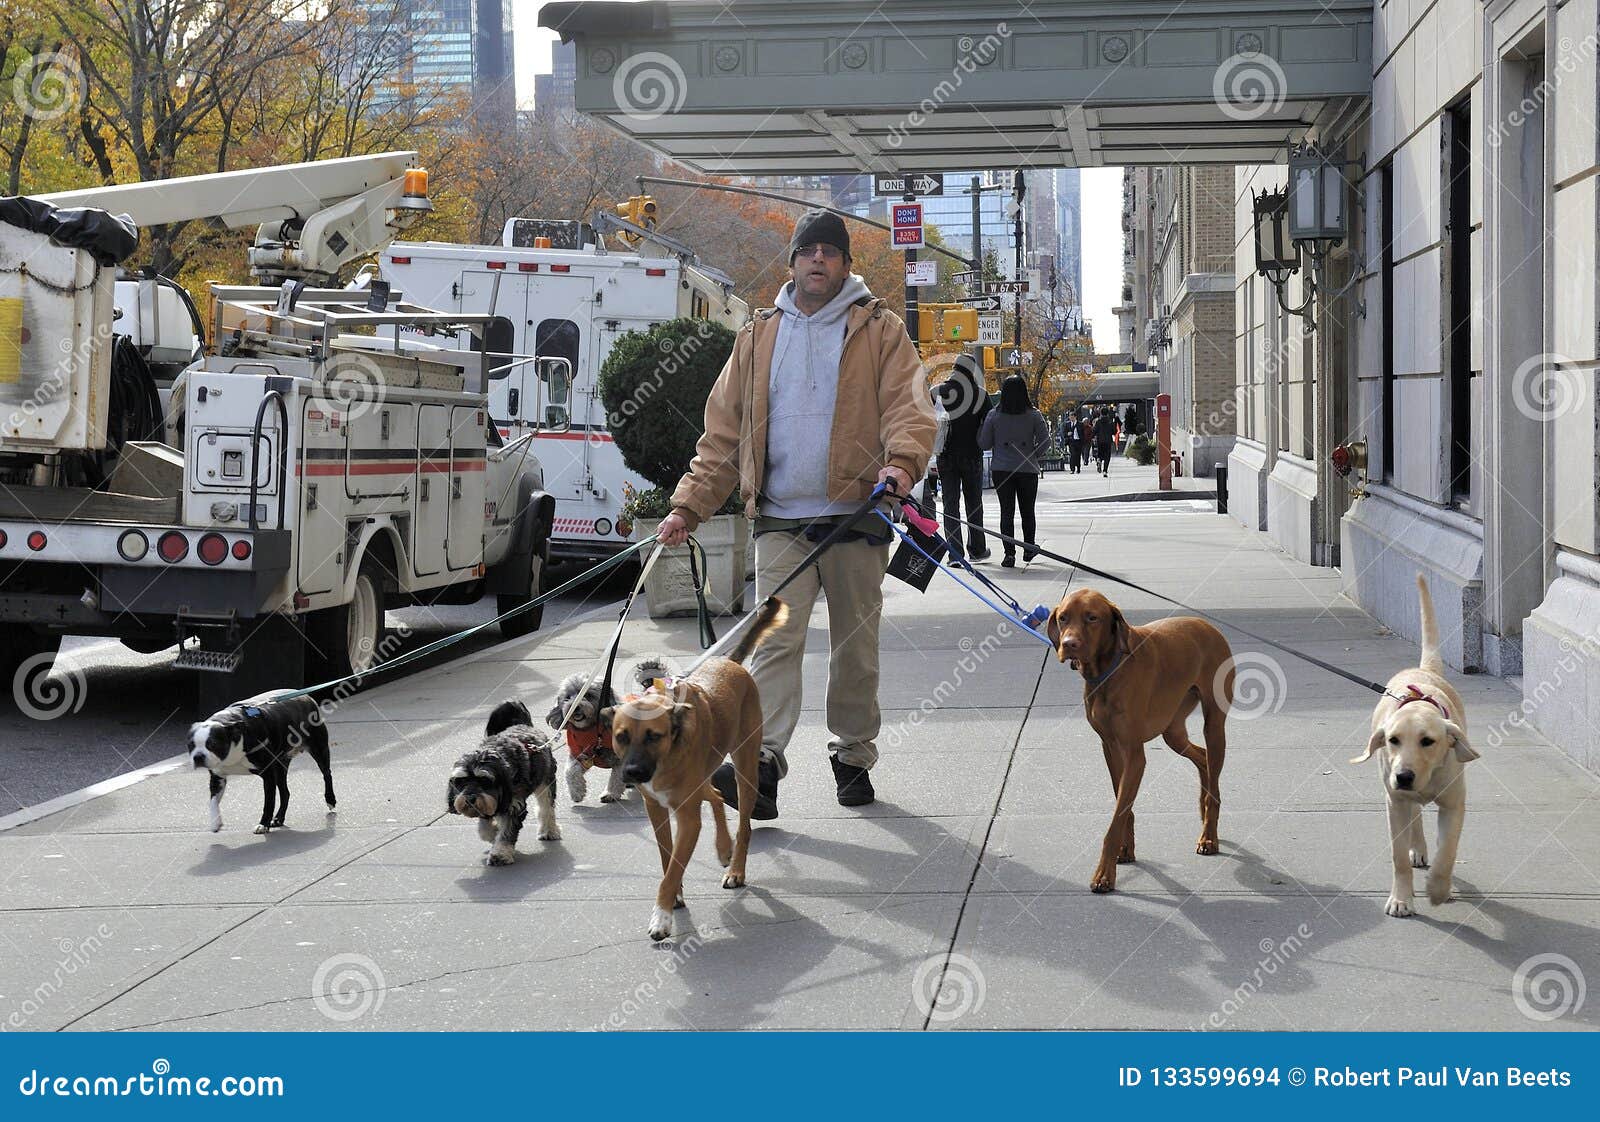 Dog Walking Service In Manhattan Editorial Stock Image